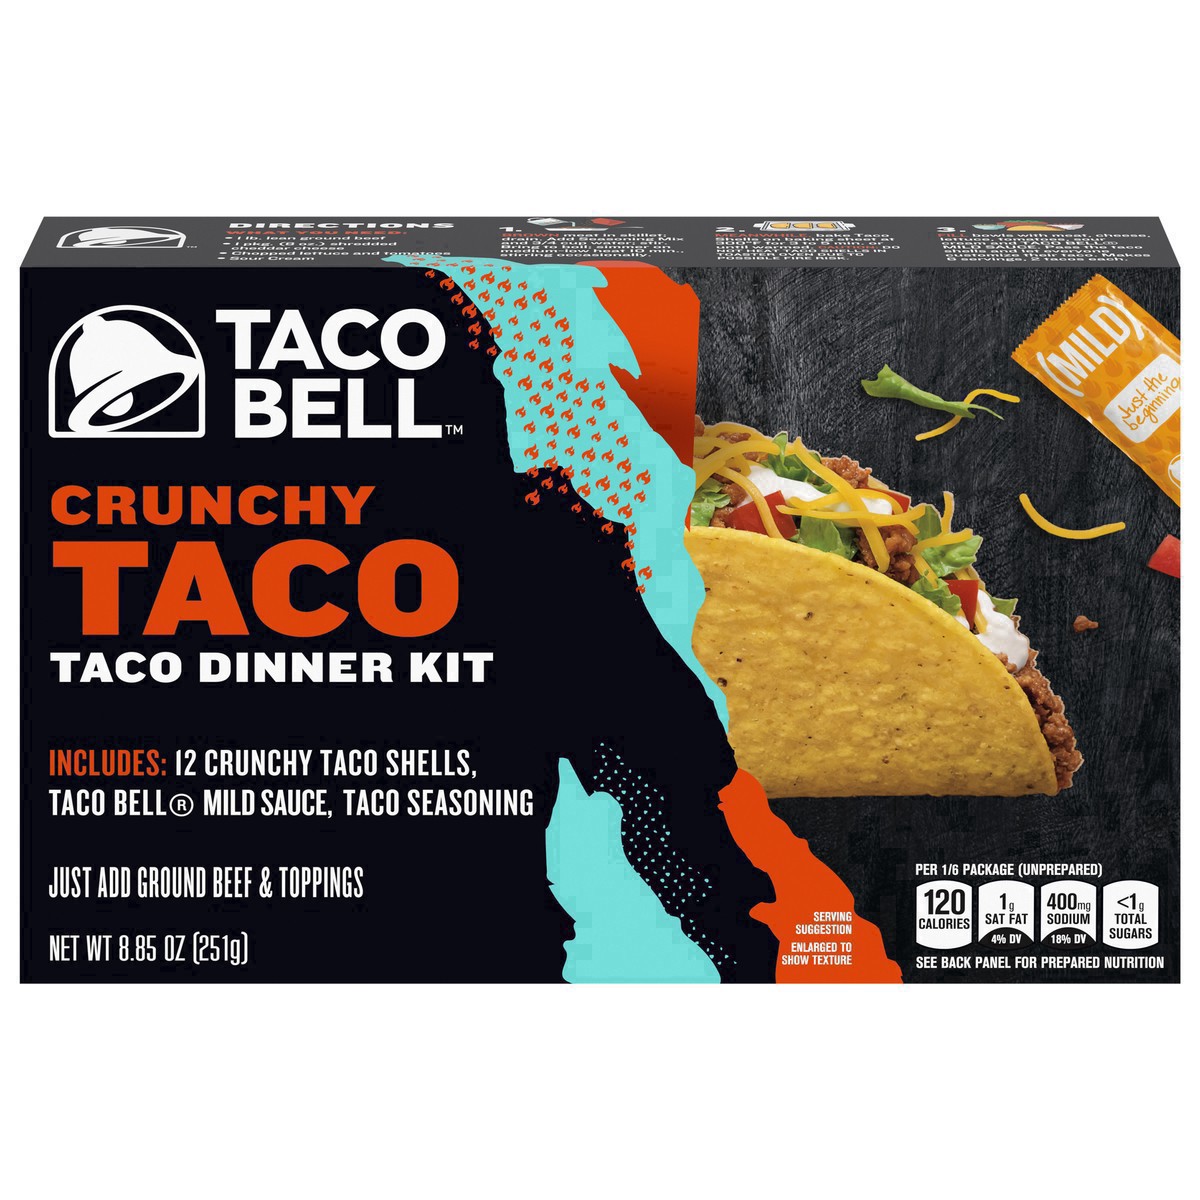 slide 12 of 91, Taco Bell Crunchy Taco Cravings Kit with 12 Crunchy Taco Shells, Taco Bell Mild Sauce & Seasoning, 8.85 oz Box, 1 ct